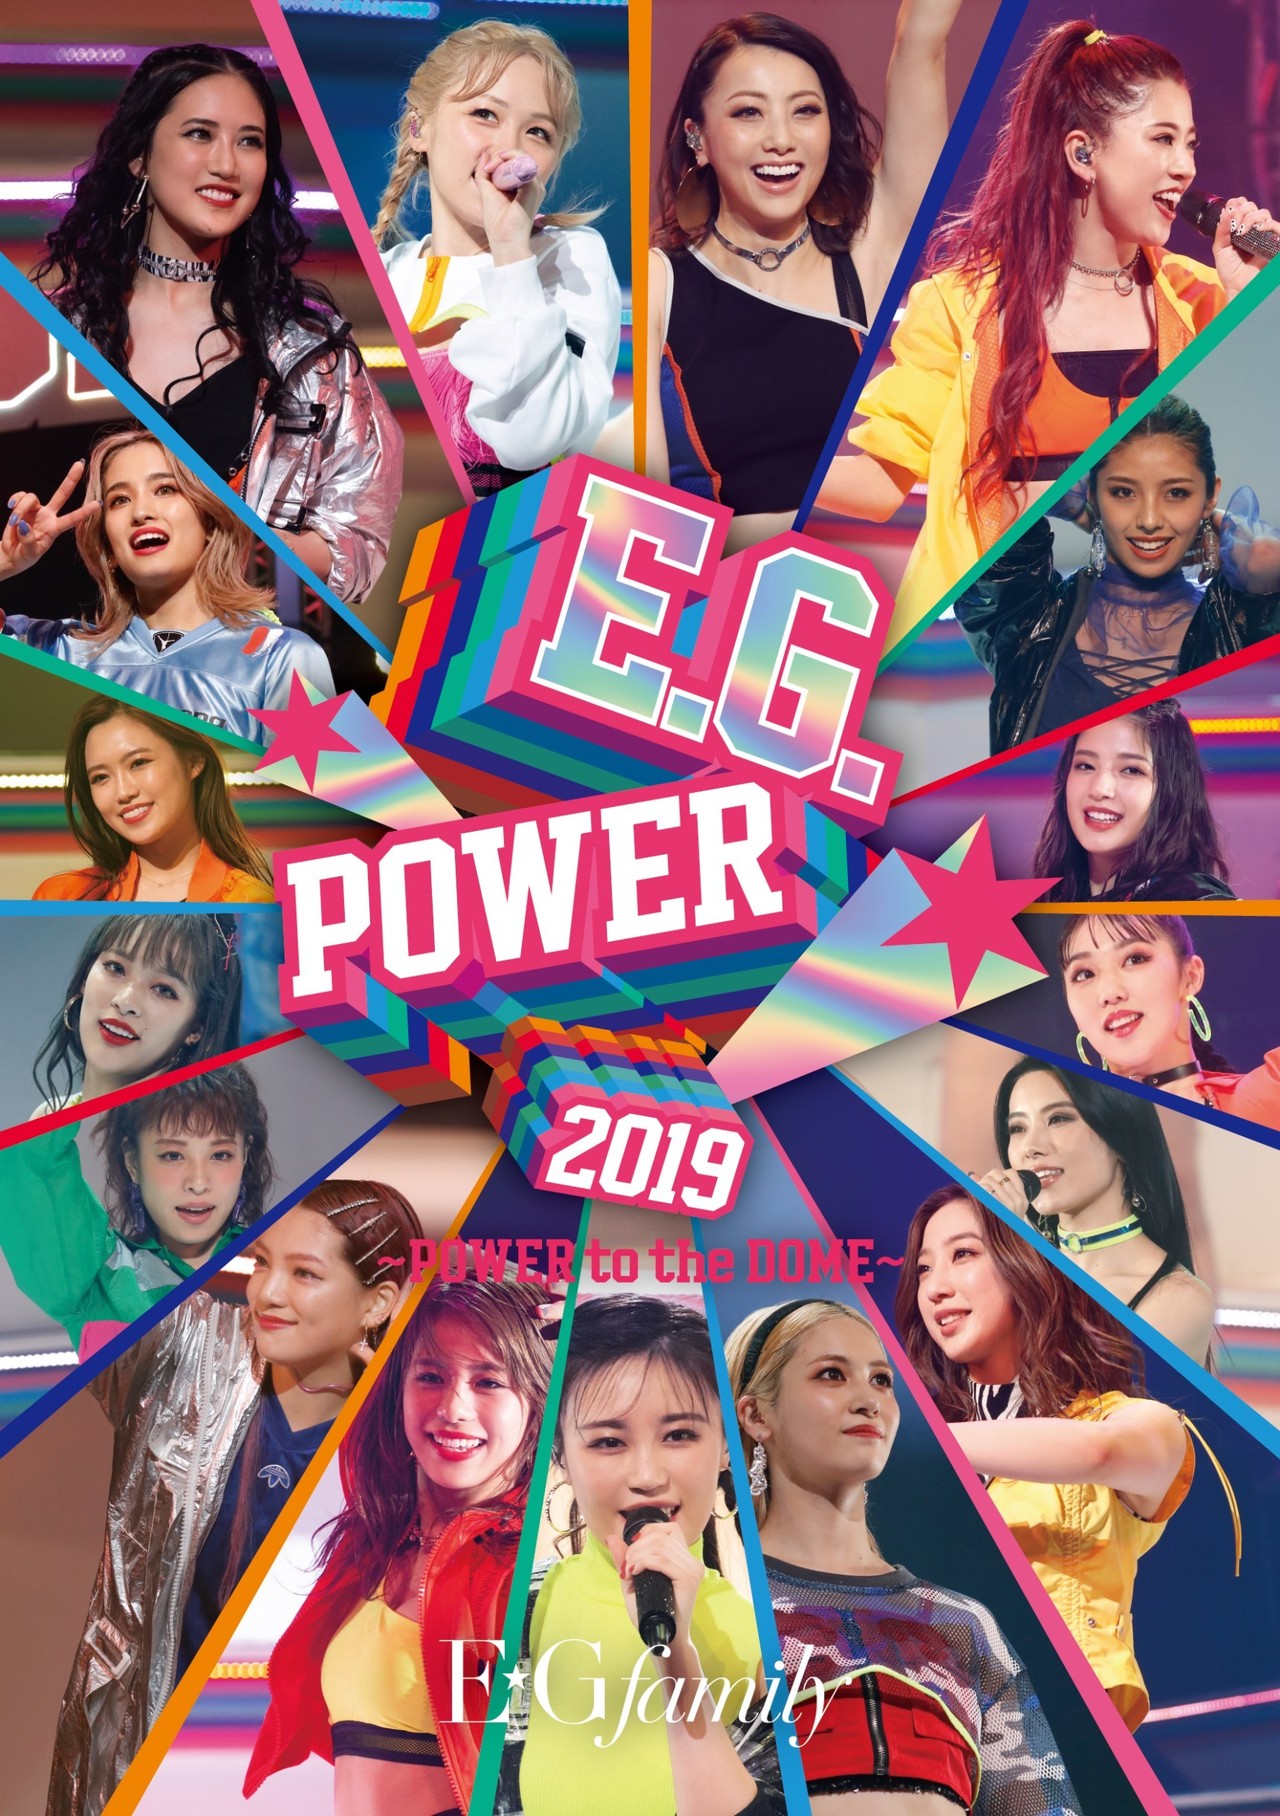 E G Power 2019 Power To The Dome Ldh Girls Wiki Fandom